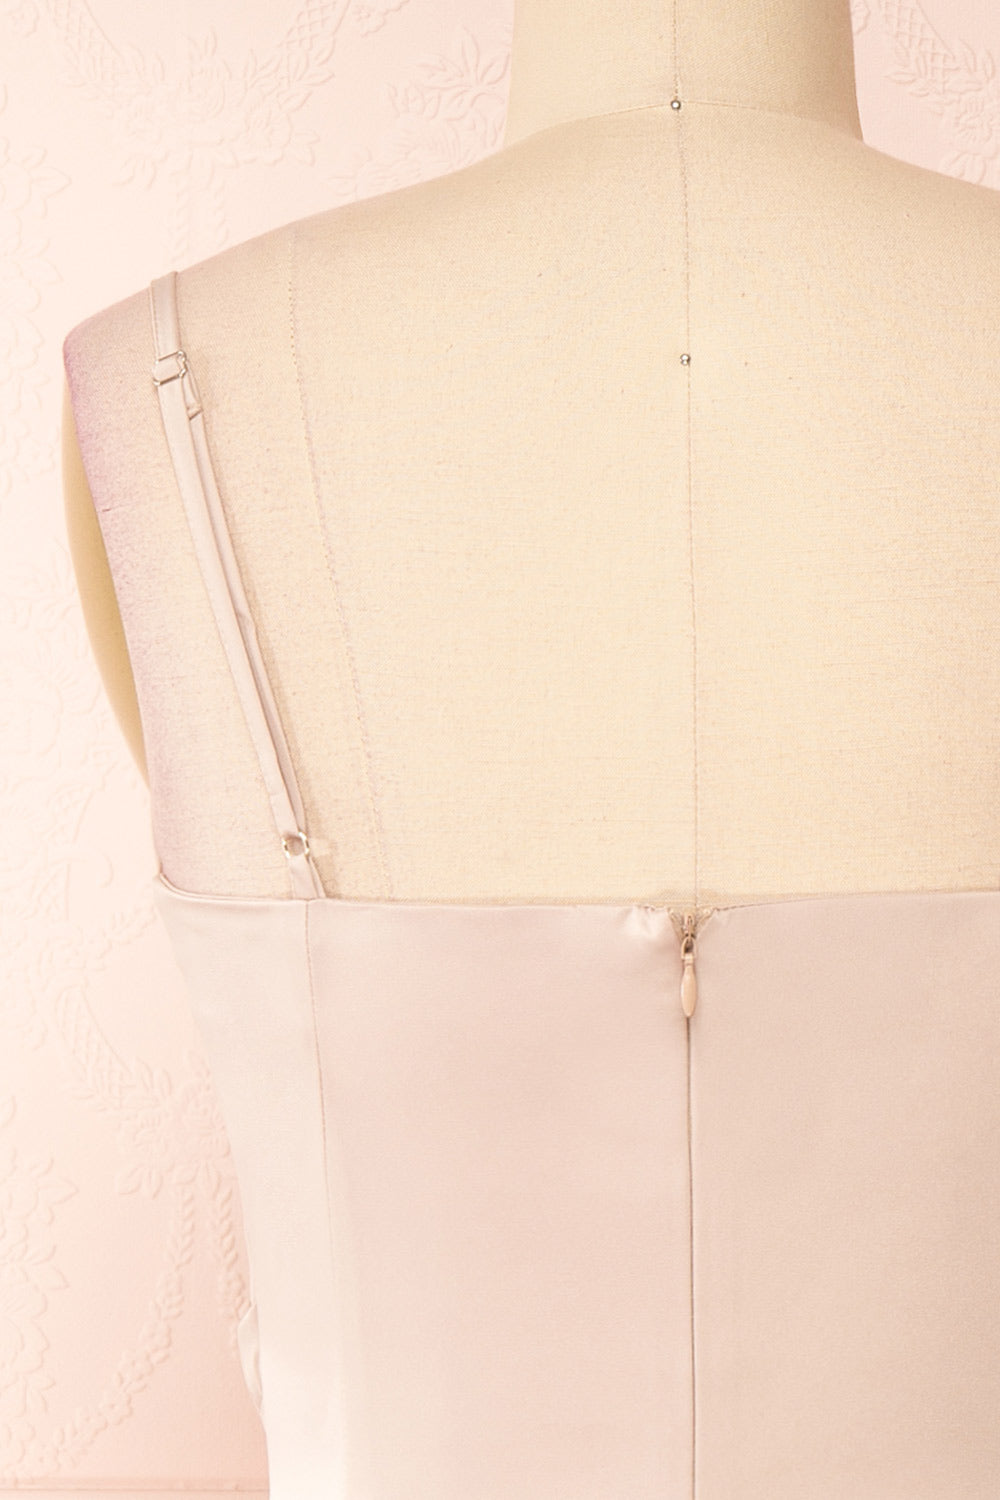 Chloe Champagne Silky Midi Slip Dress | Boutique 1861 back close-up